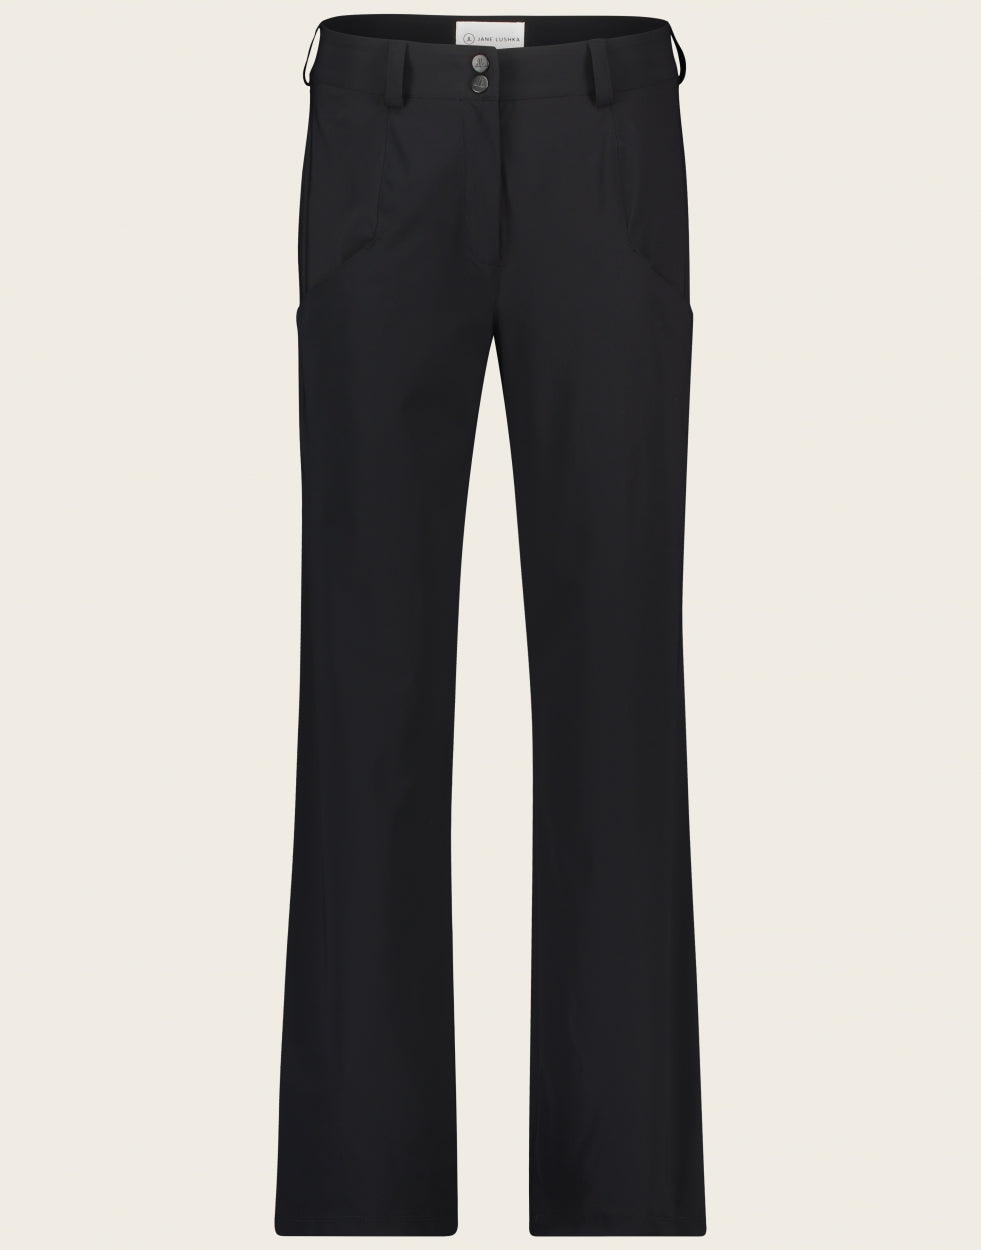 Pants Emily Technical Jersey | Black